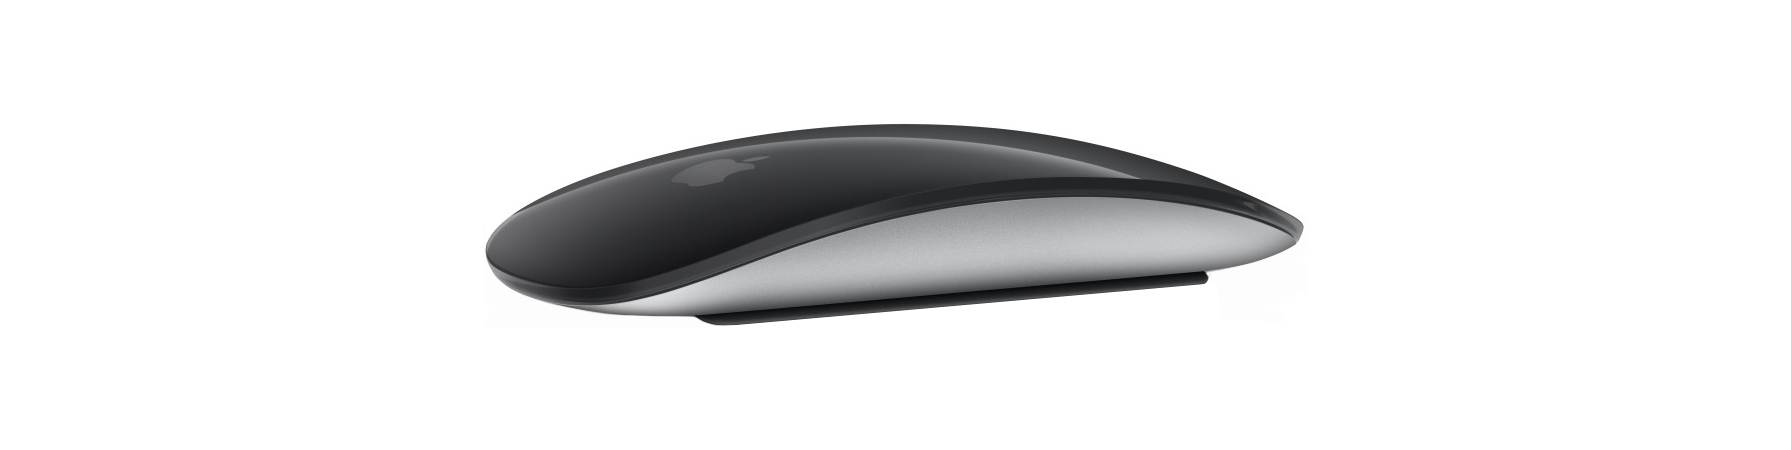 Apple Magic Mouse 3 Black, Цвет: Black / Черный